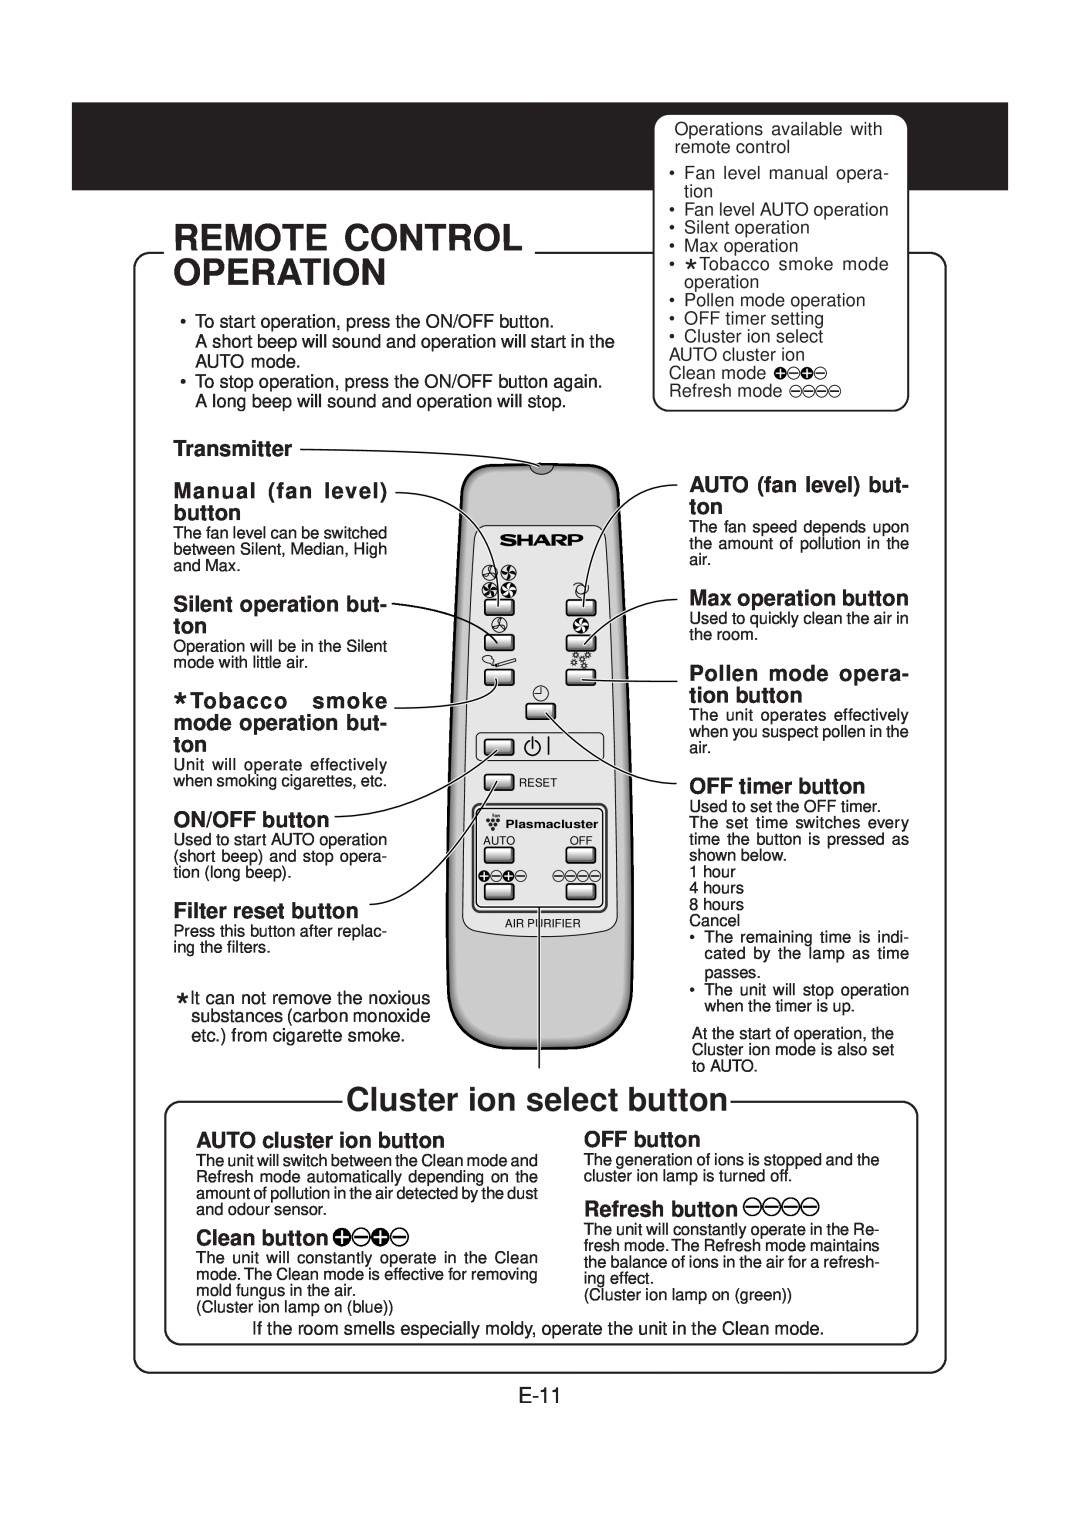 Sharp FU-40SE-K operation manual Remote Control, Operation, Cluster ion select button, E-11 